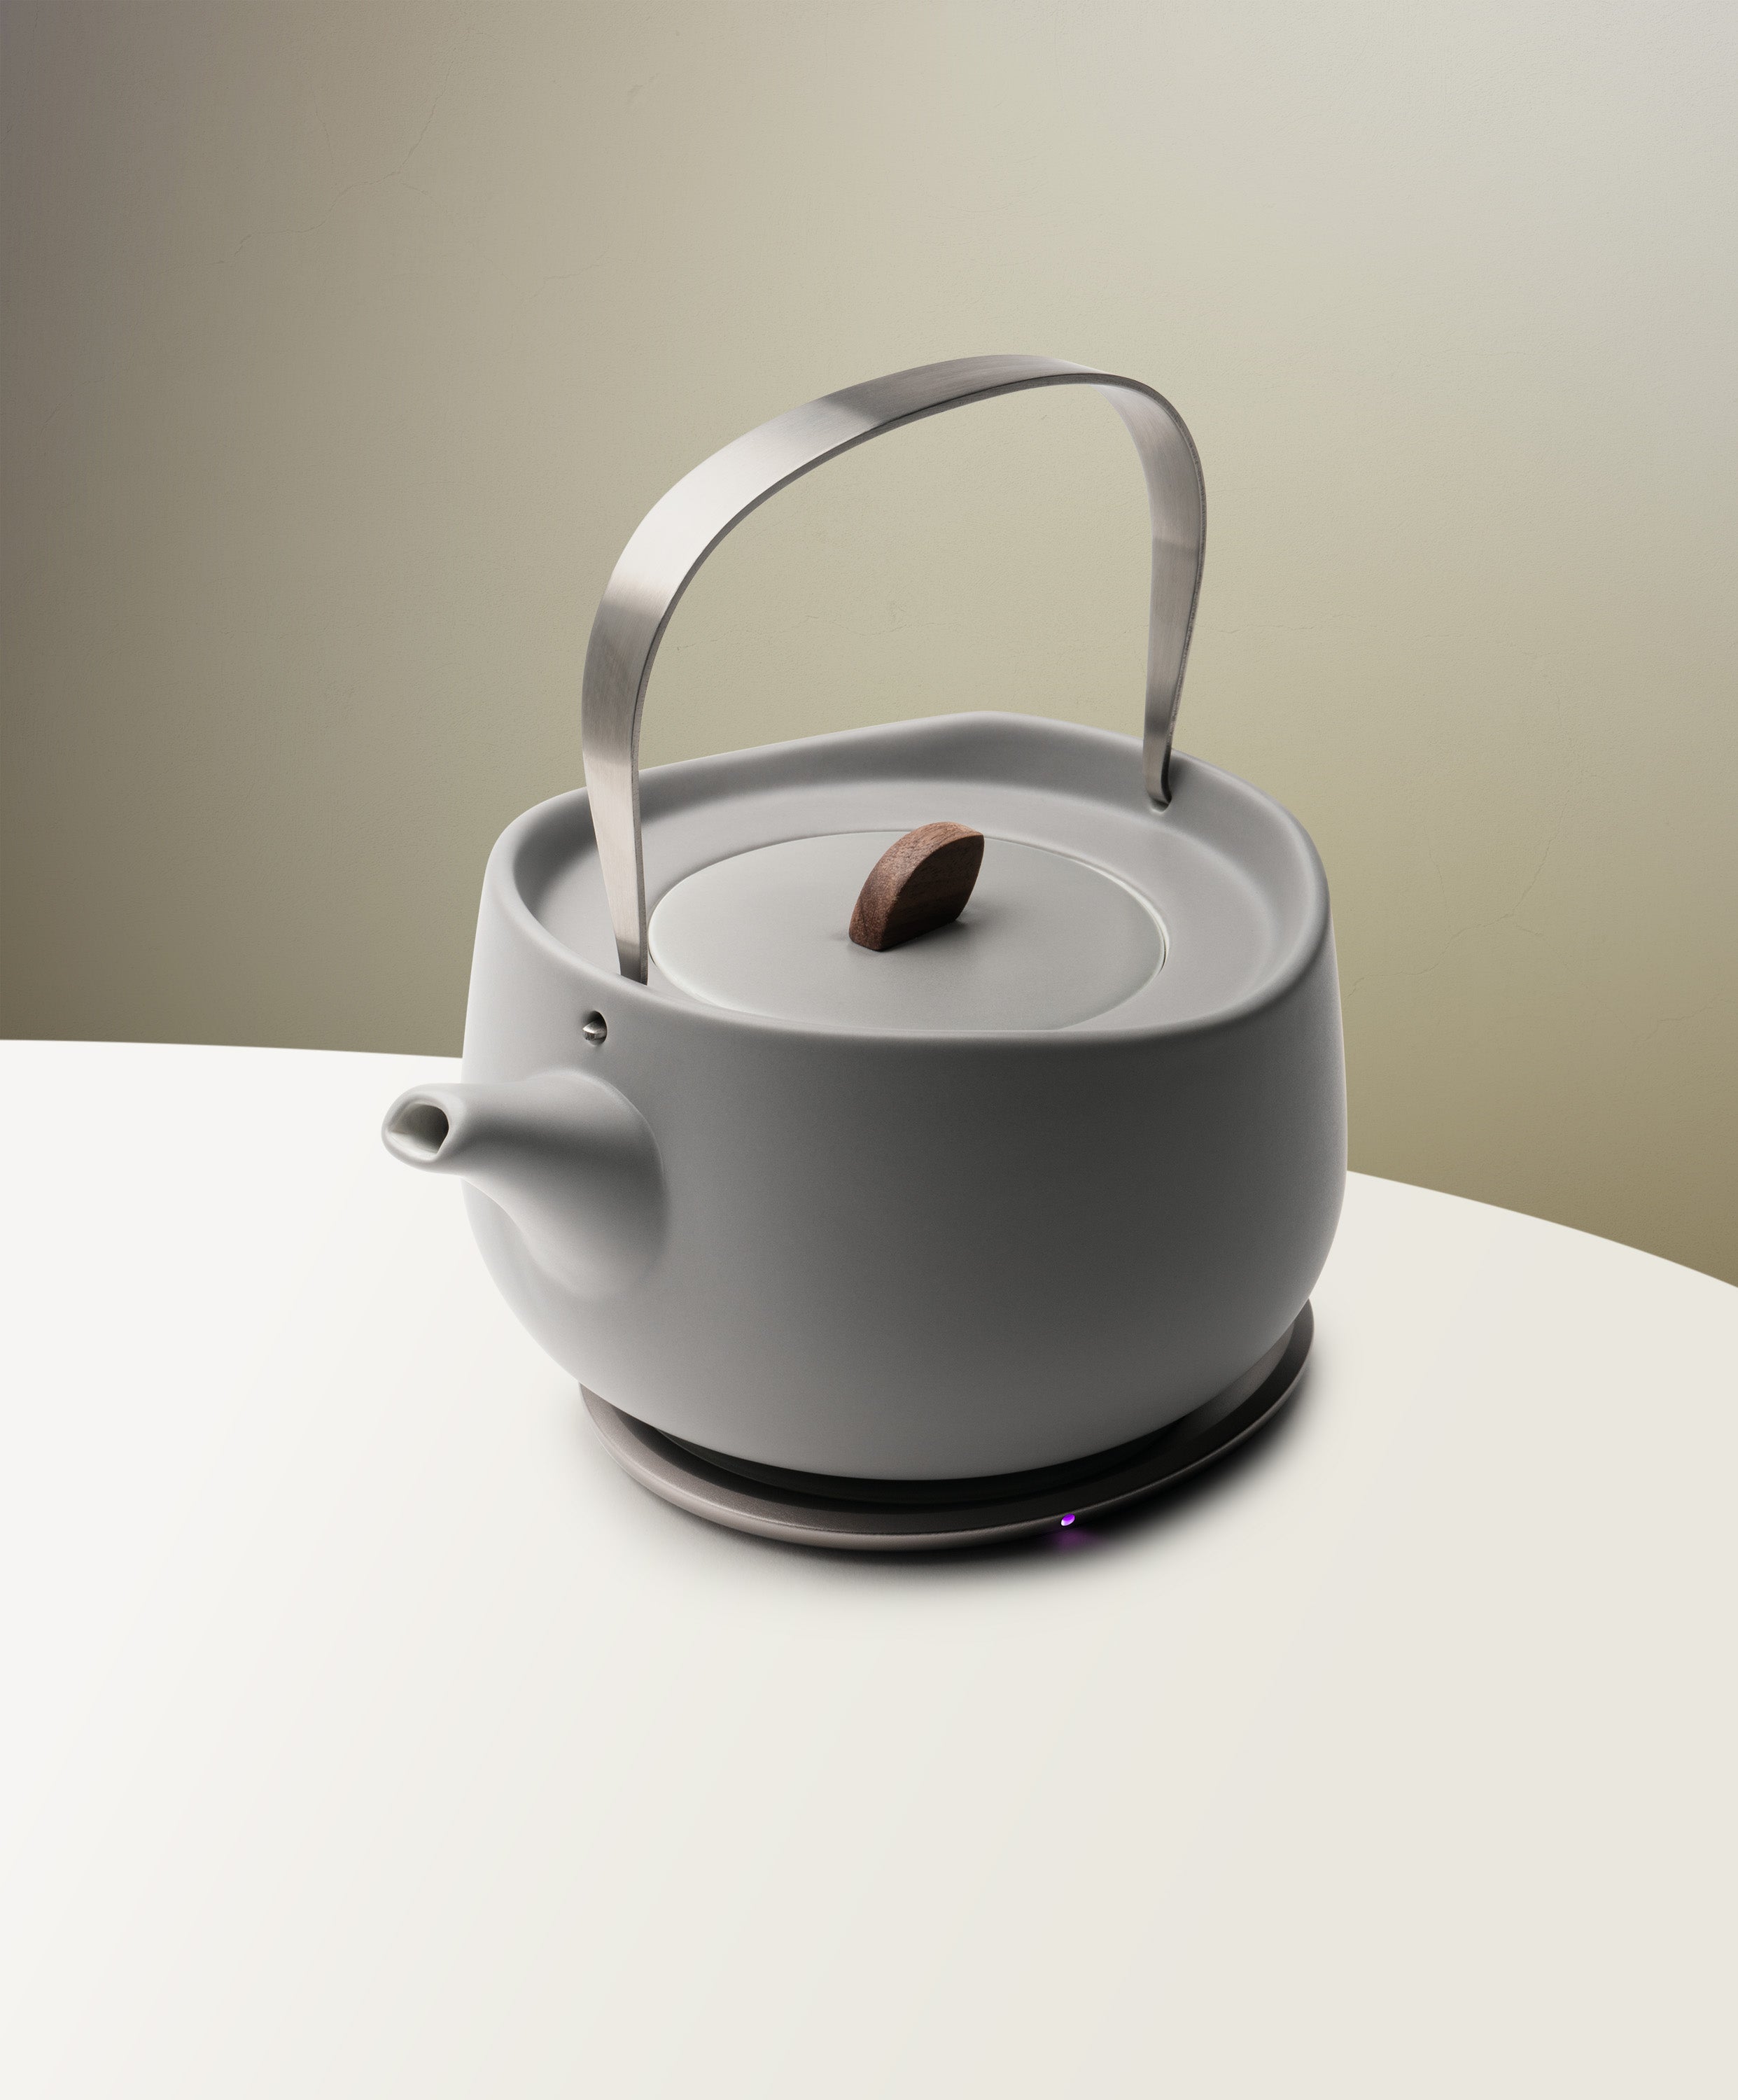 Leiph Self-heating Teapot Set - Soft Gray